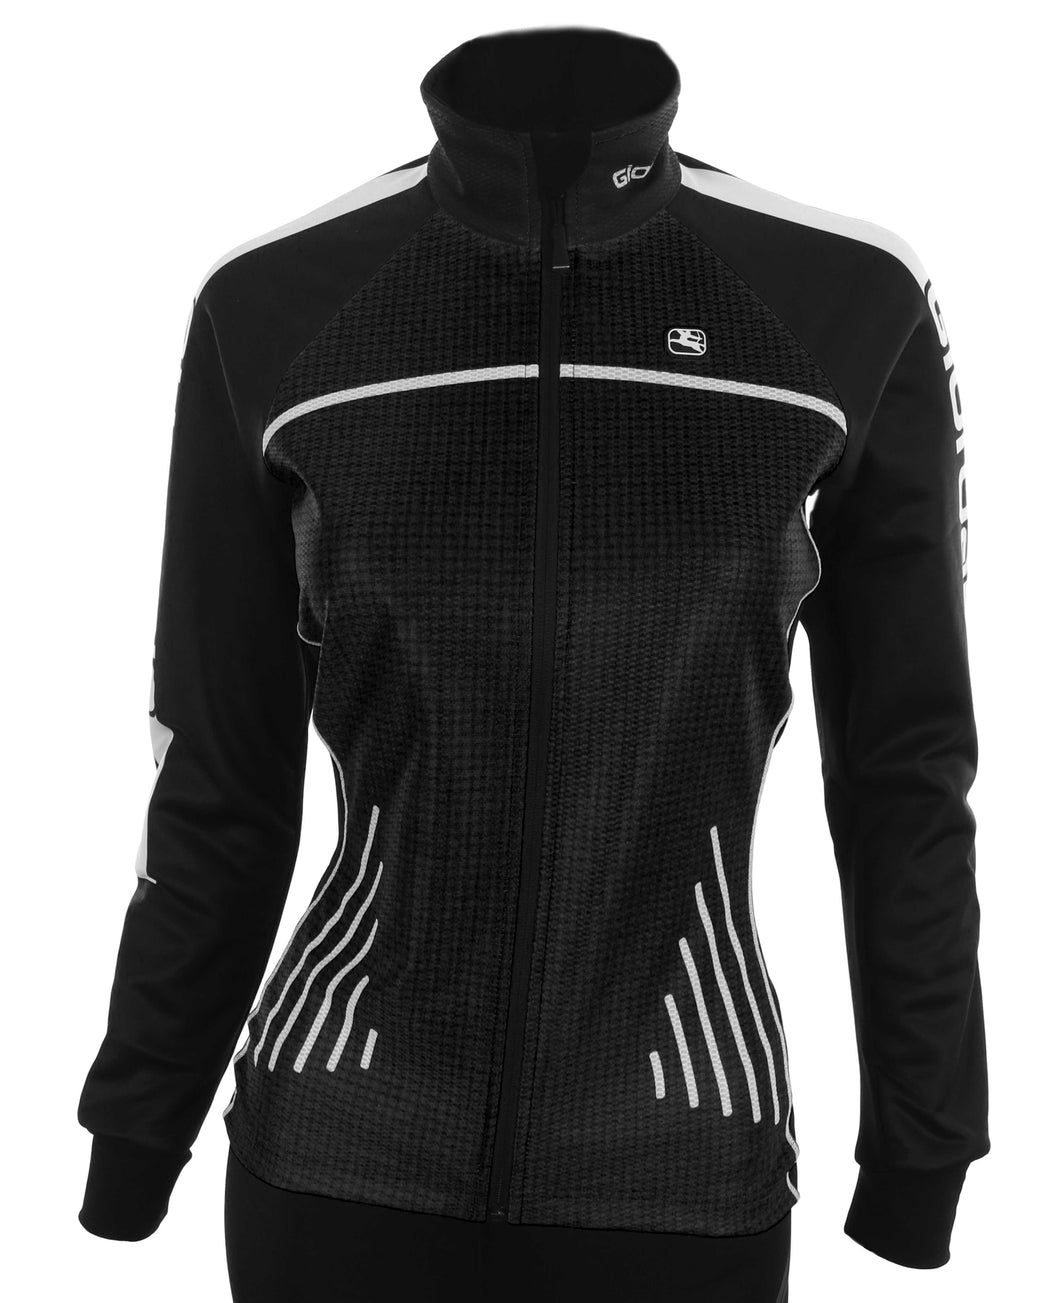 Giordana Women's Silverline Jacket - Black